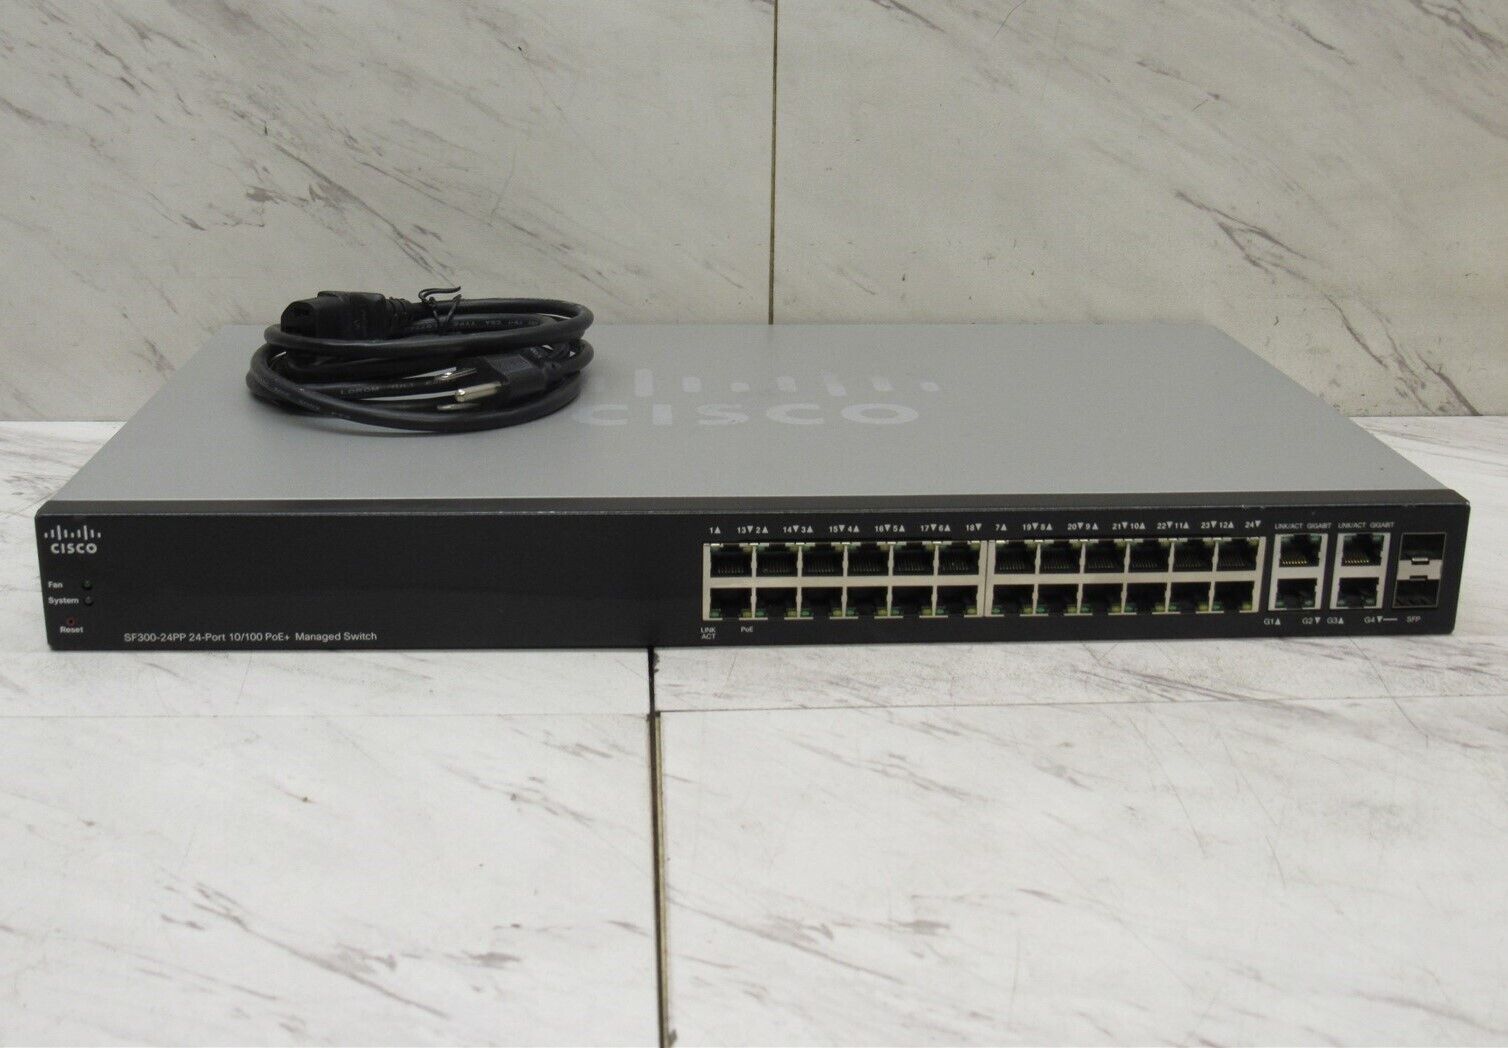 Cisco SF300-24PP-K9 24-Port 10/100 PoE Managed Switch with Gigabit Uplink 